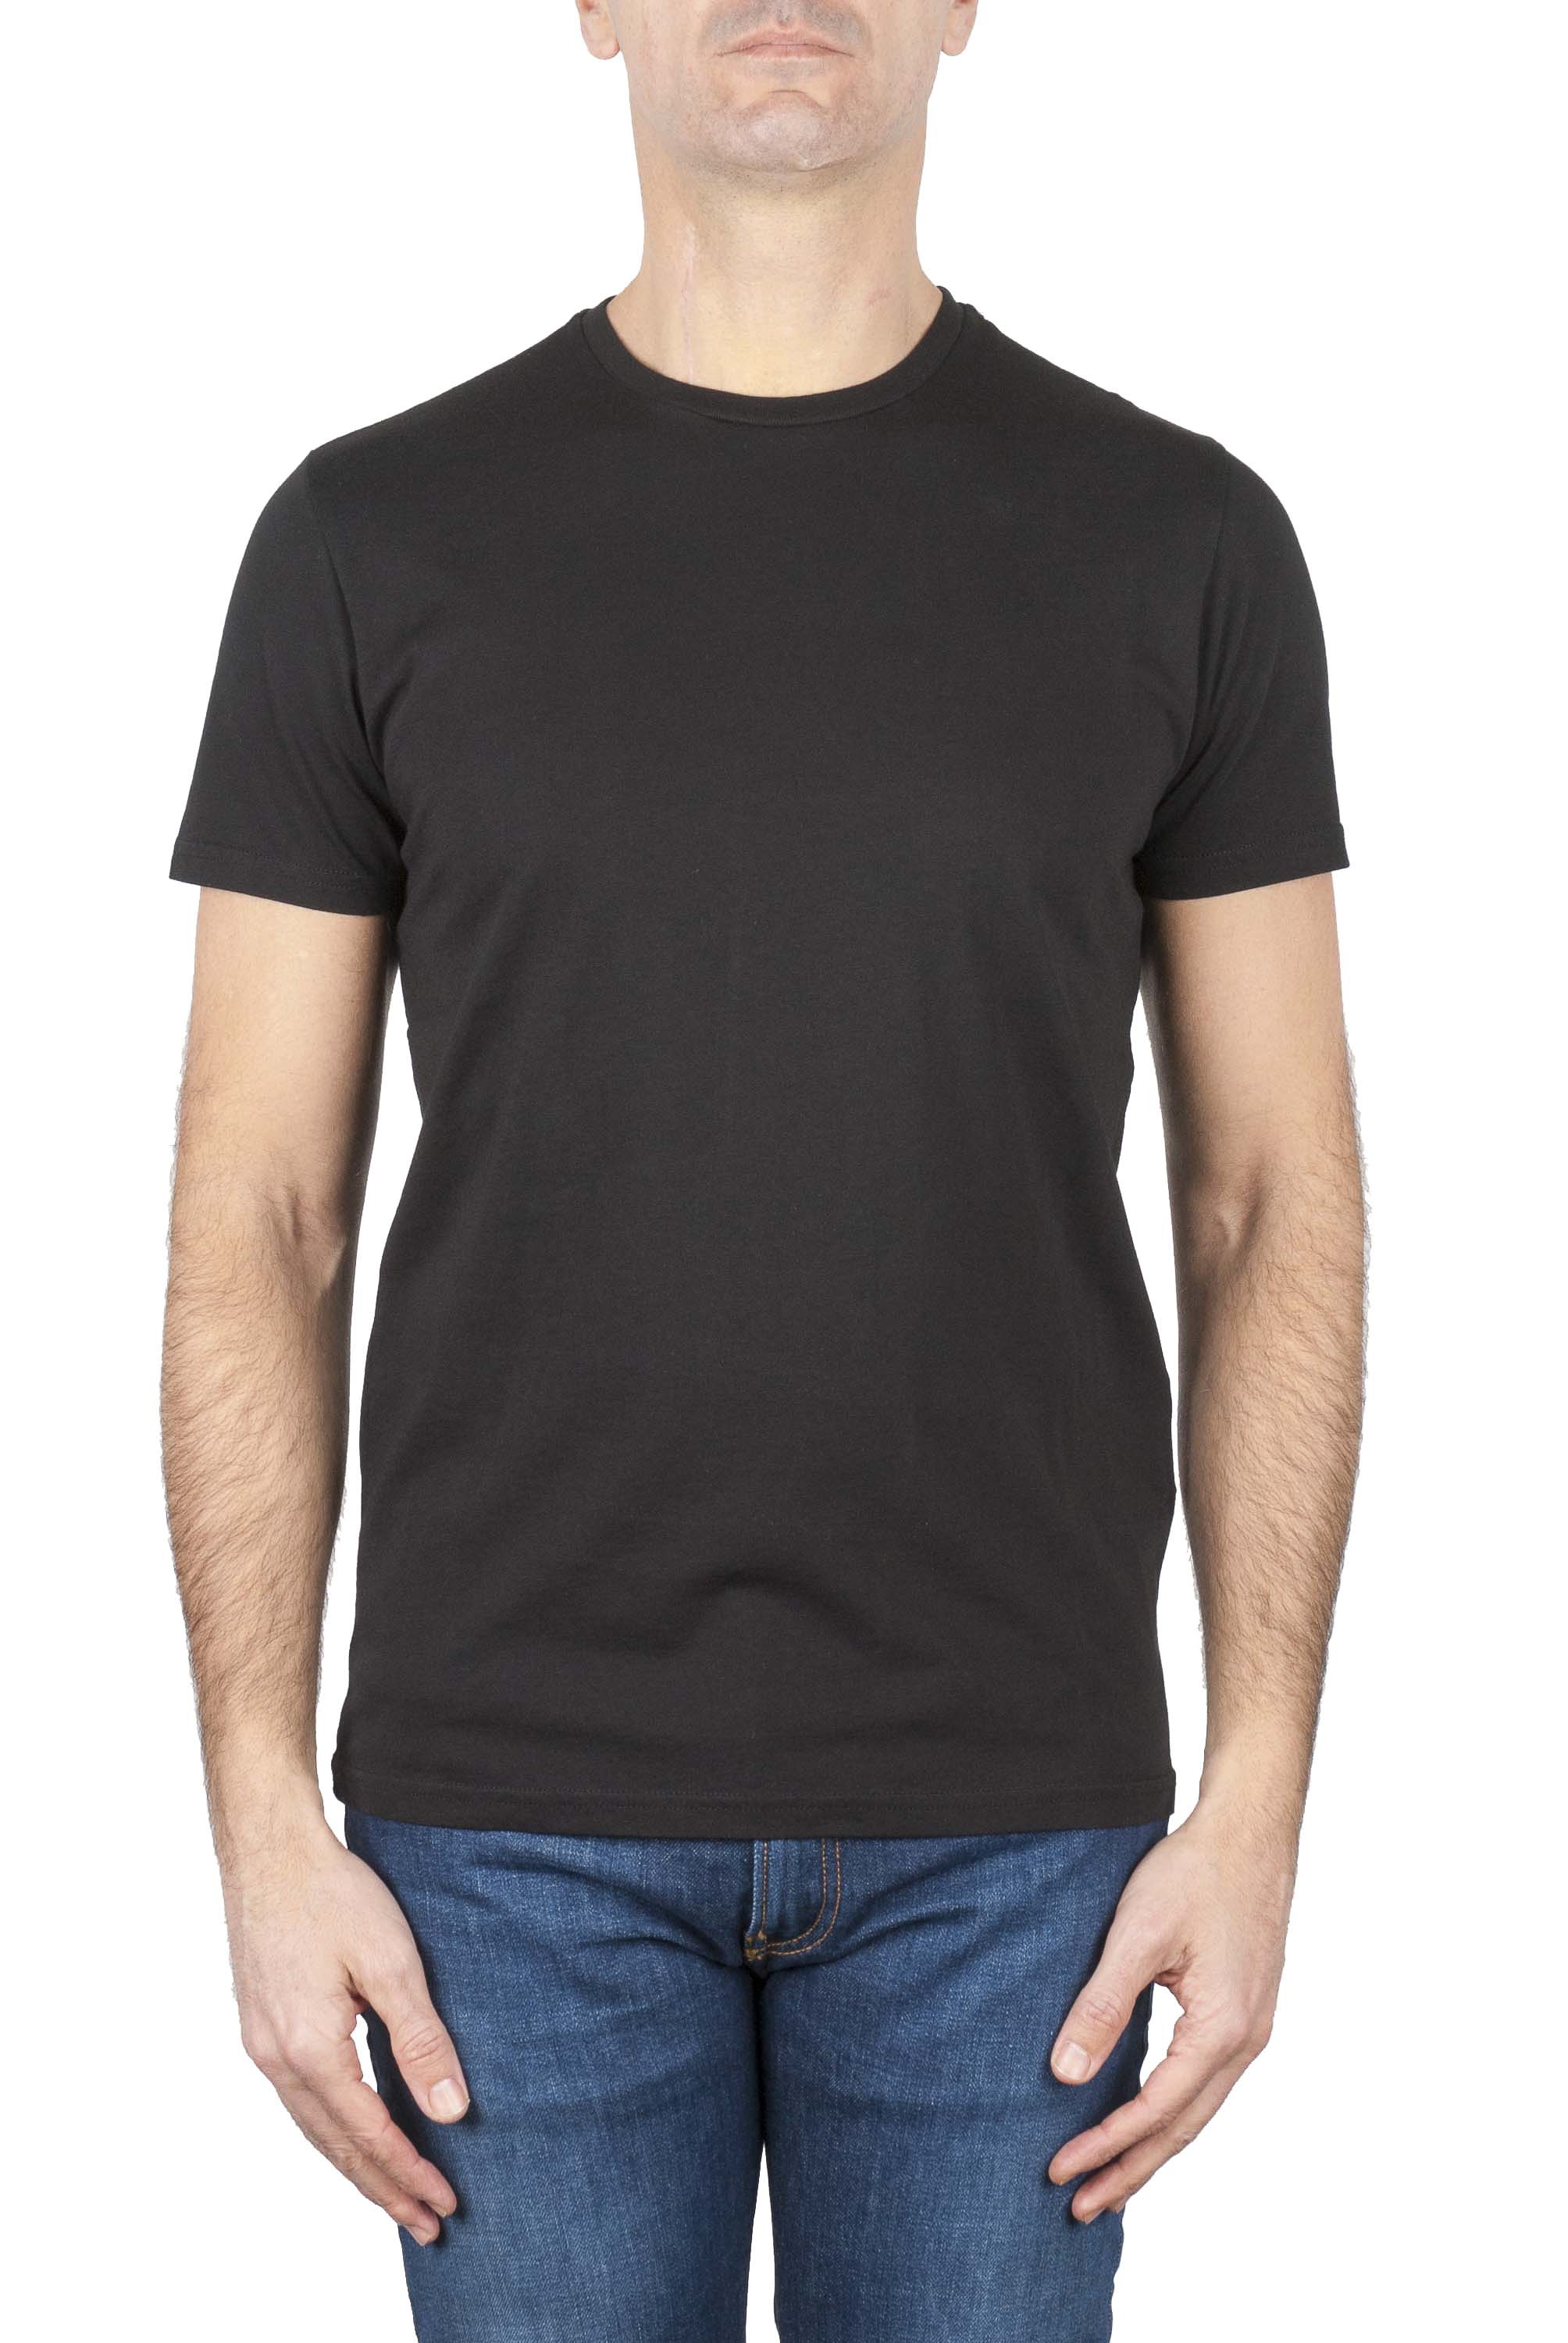 SBU 01748_19AW Classic short sleeve cotton round neck t-shirt black 01